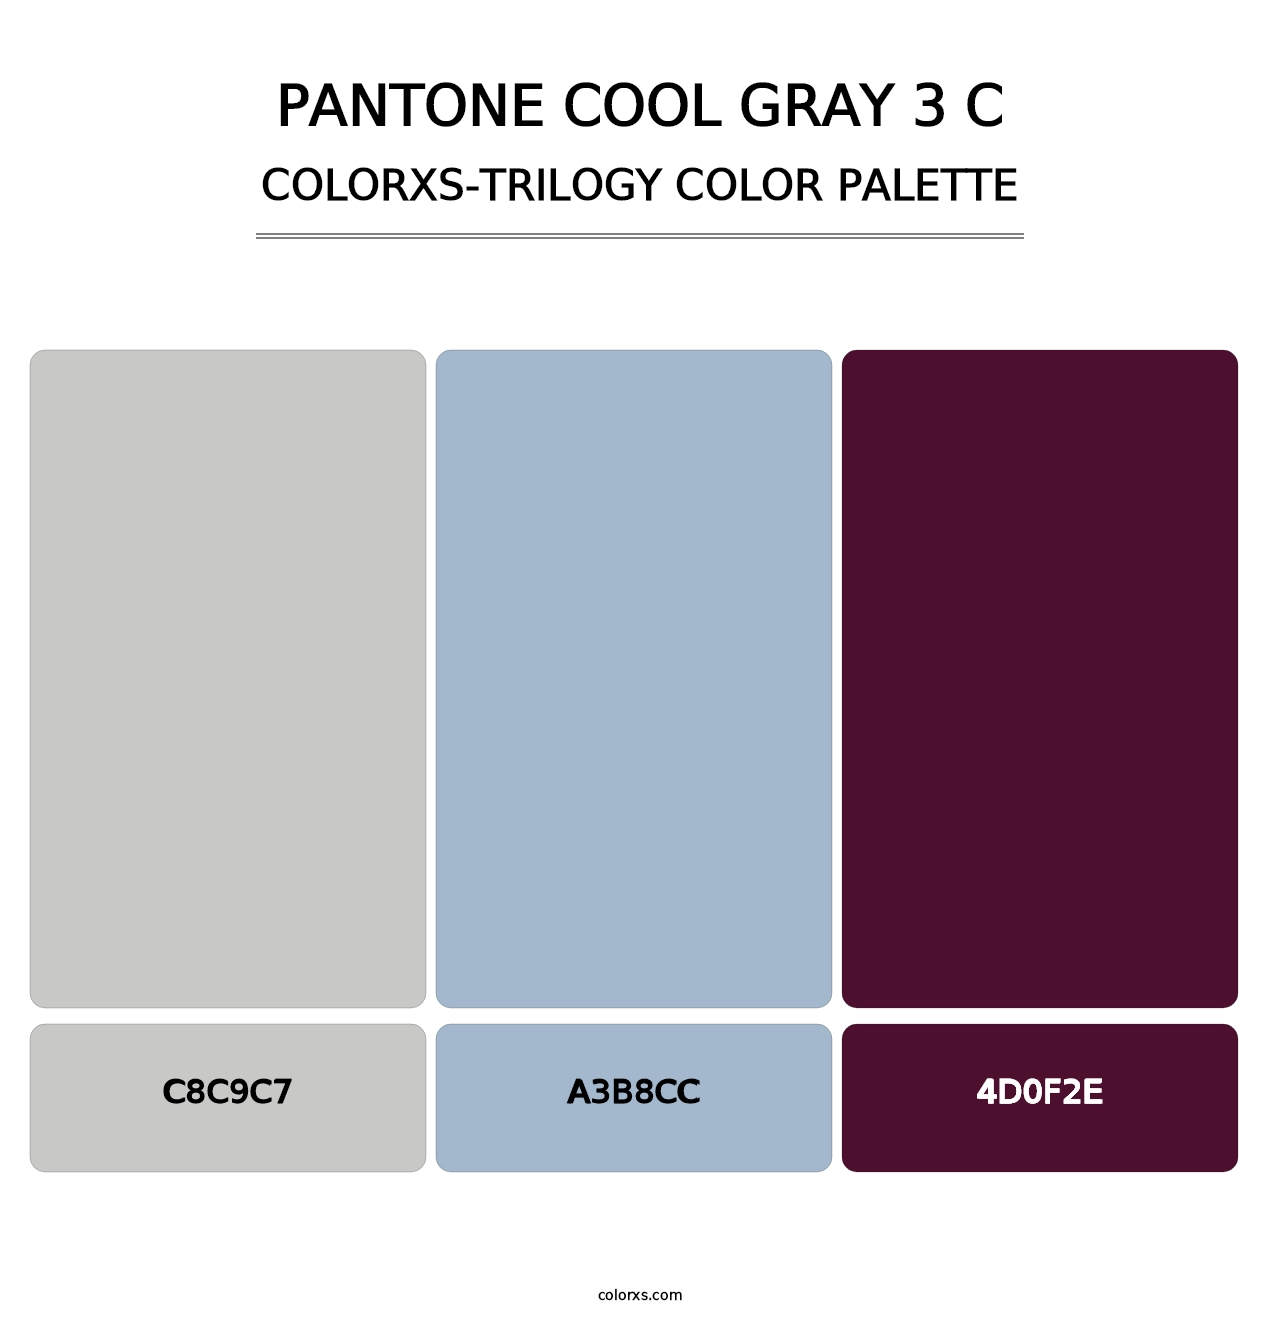 PANTONE Cool Gray 3 C - Colorxs Trilogy Palette